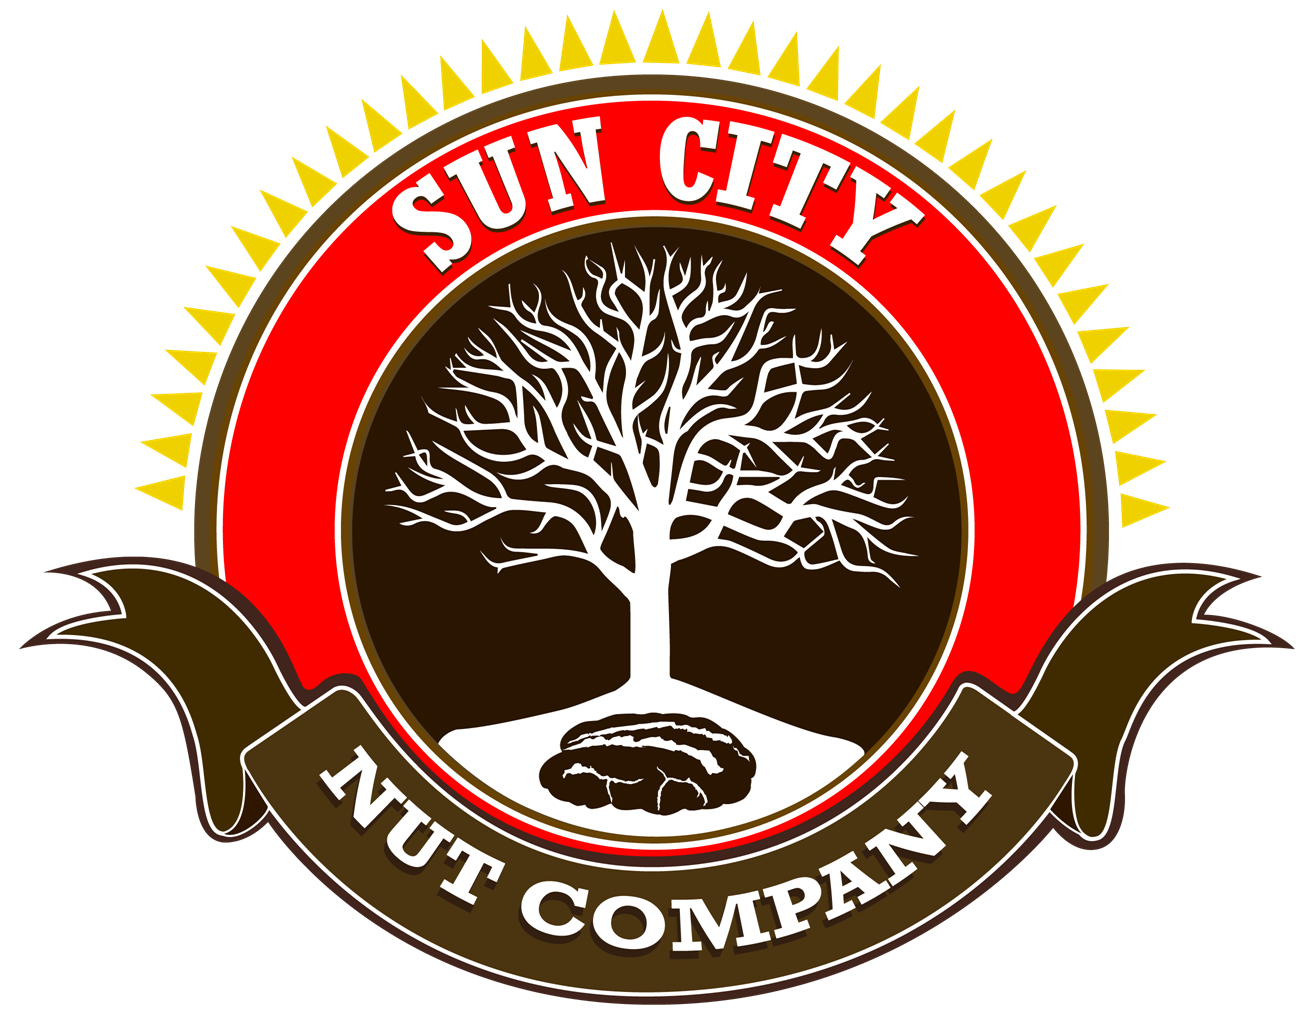 Sun City Nut Company